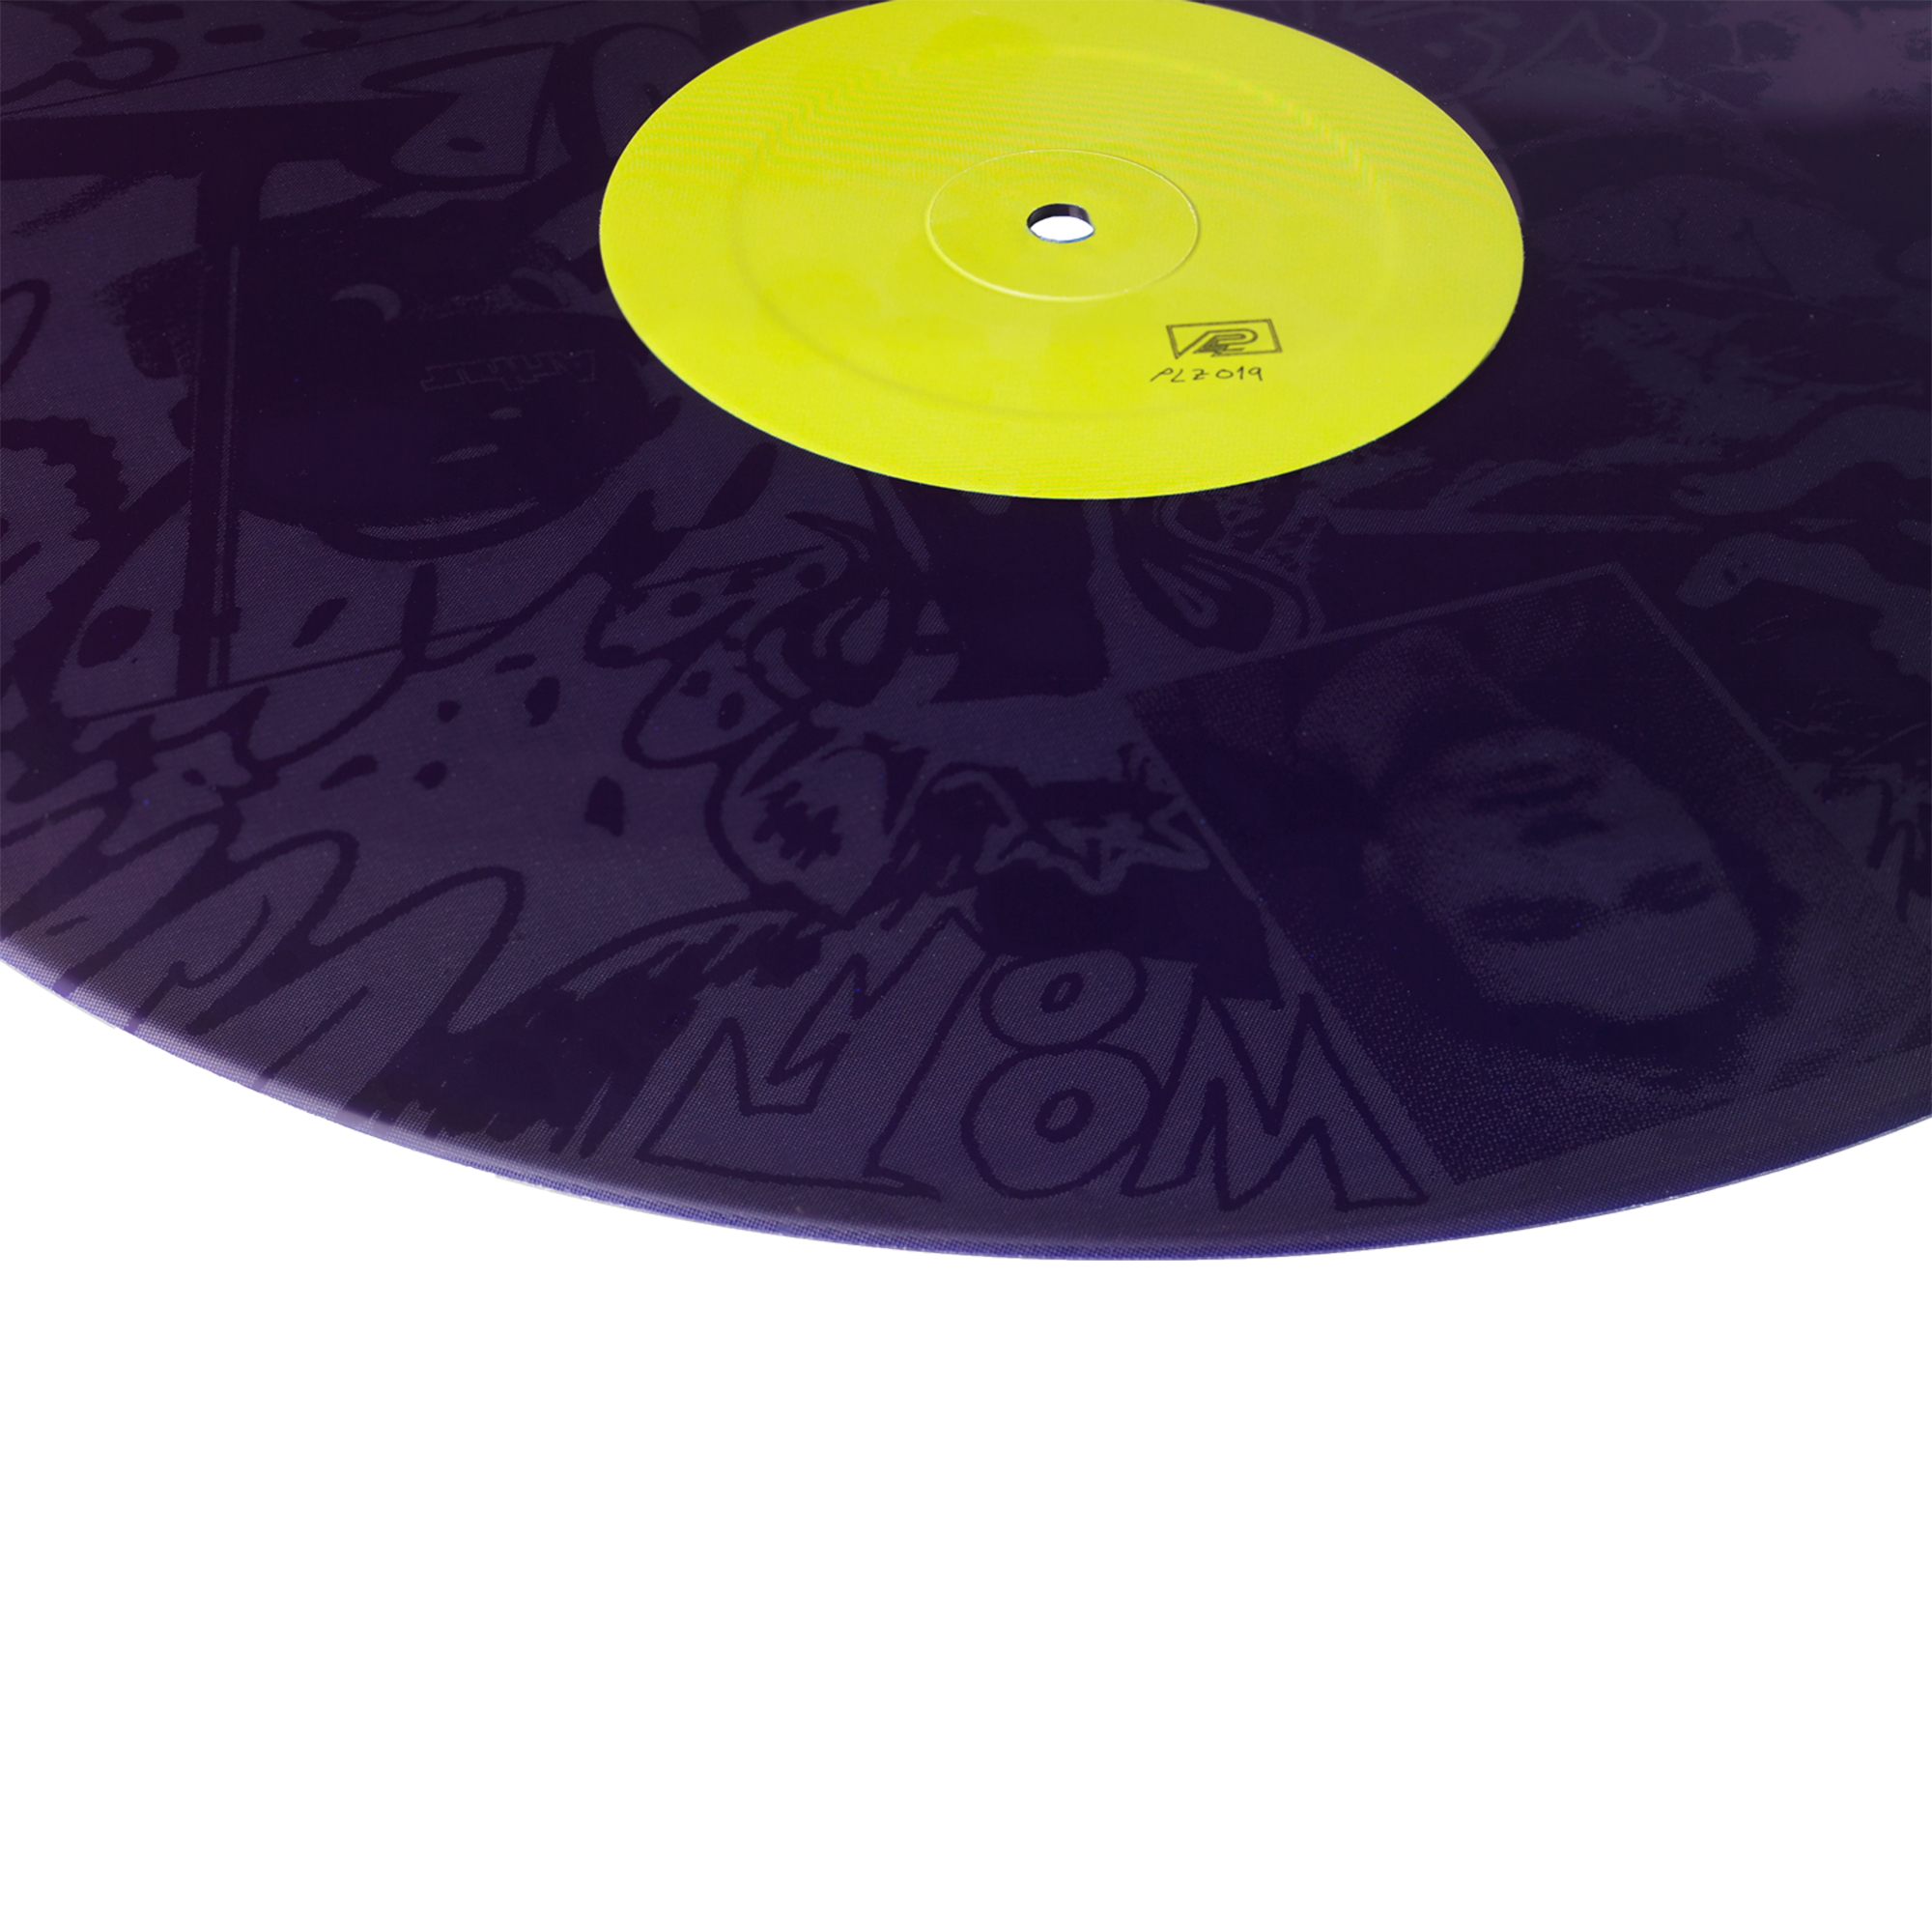 ARTHUR - Woof Woof 5th Anniversary Purple 12" Vinyl